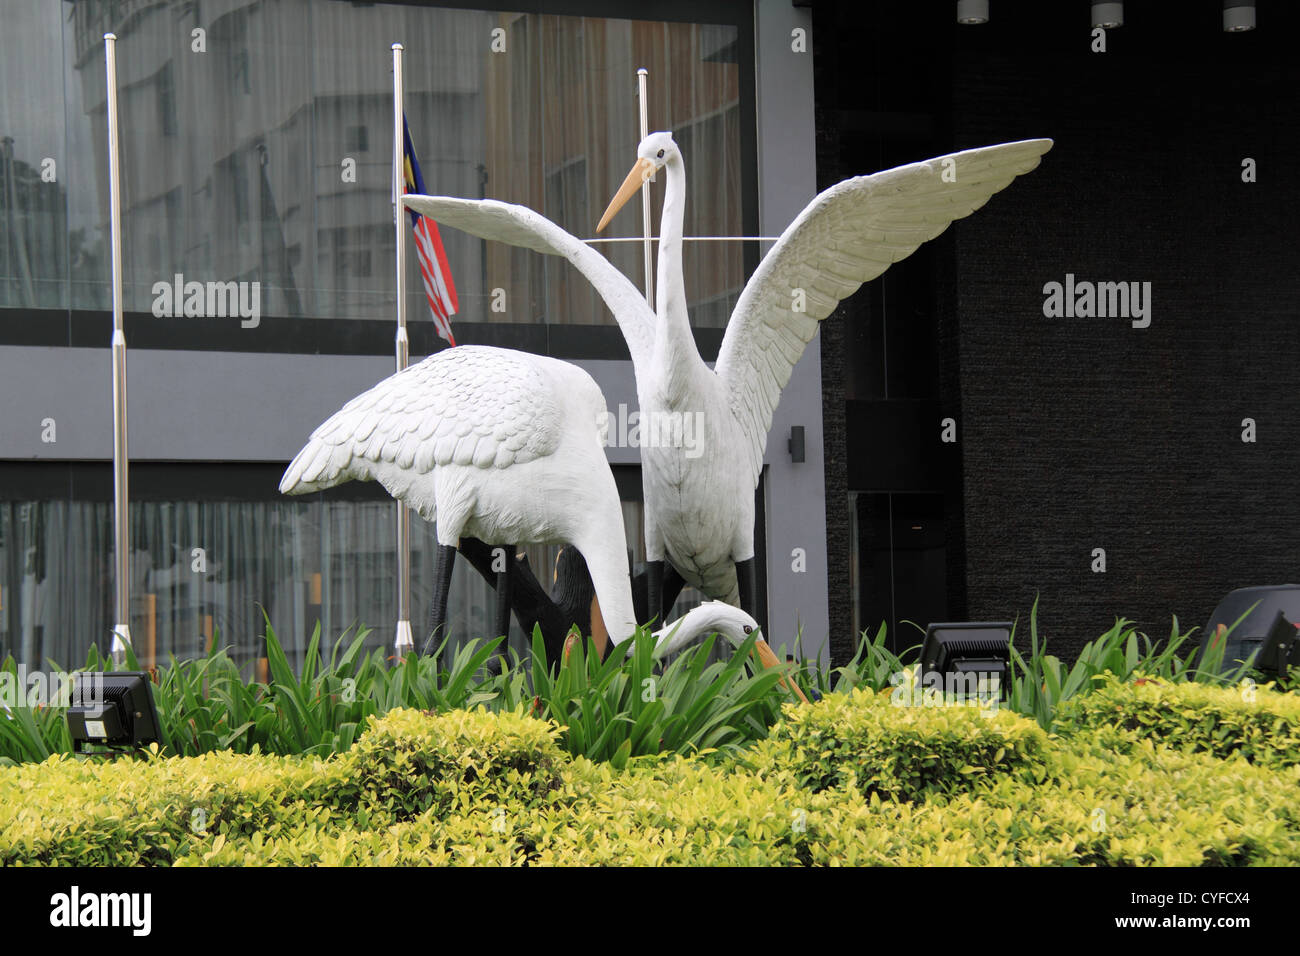 Eastern Great Egret sculpture outside Horizon Hotel, Julan Pantai, Kota Kinabalu, Sabah, Borneo, Malaysia, Southeast Asia Stock Photo